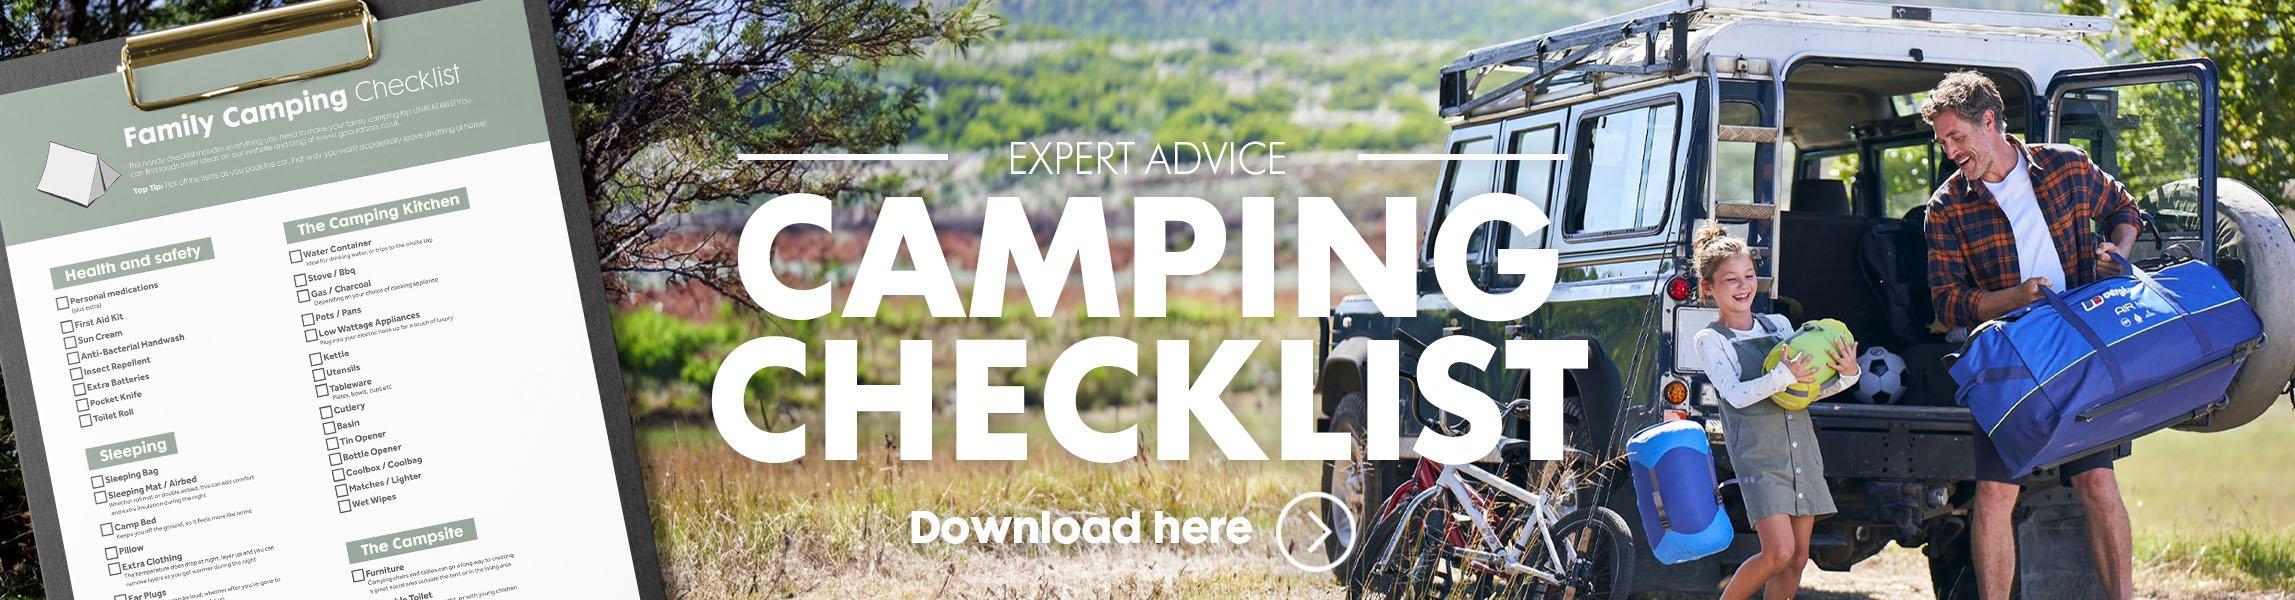 https://cdn.media.amplience.net/i/jpl/230627-Camping-checklist-banners2-hero-banner